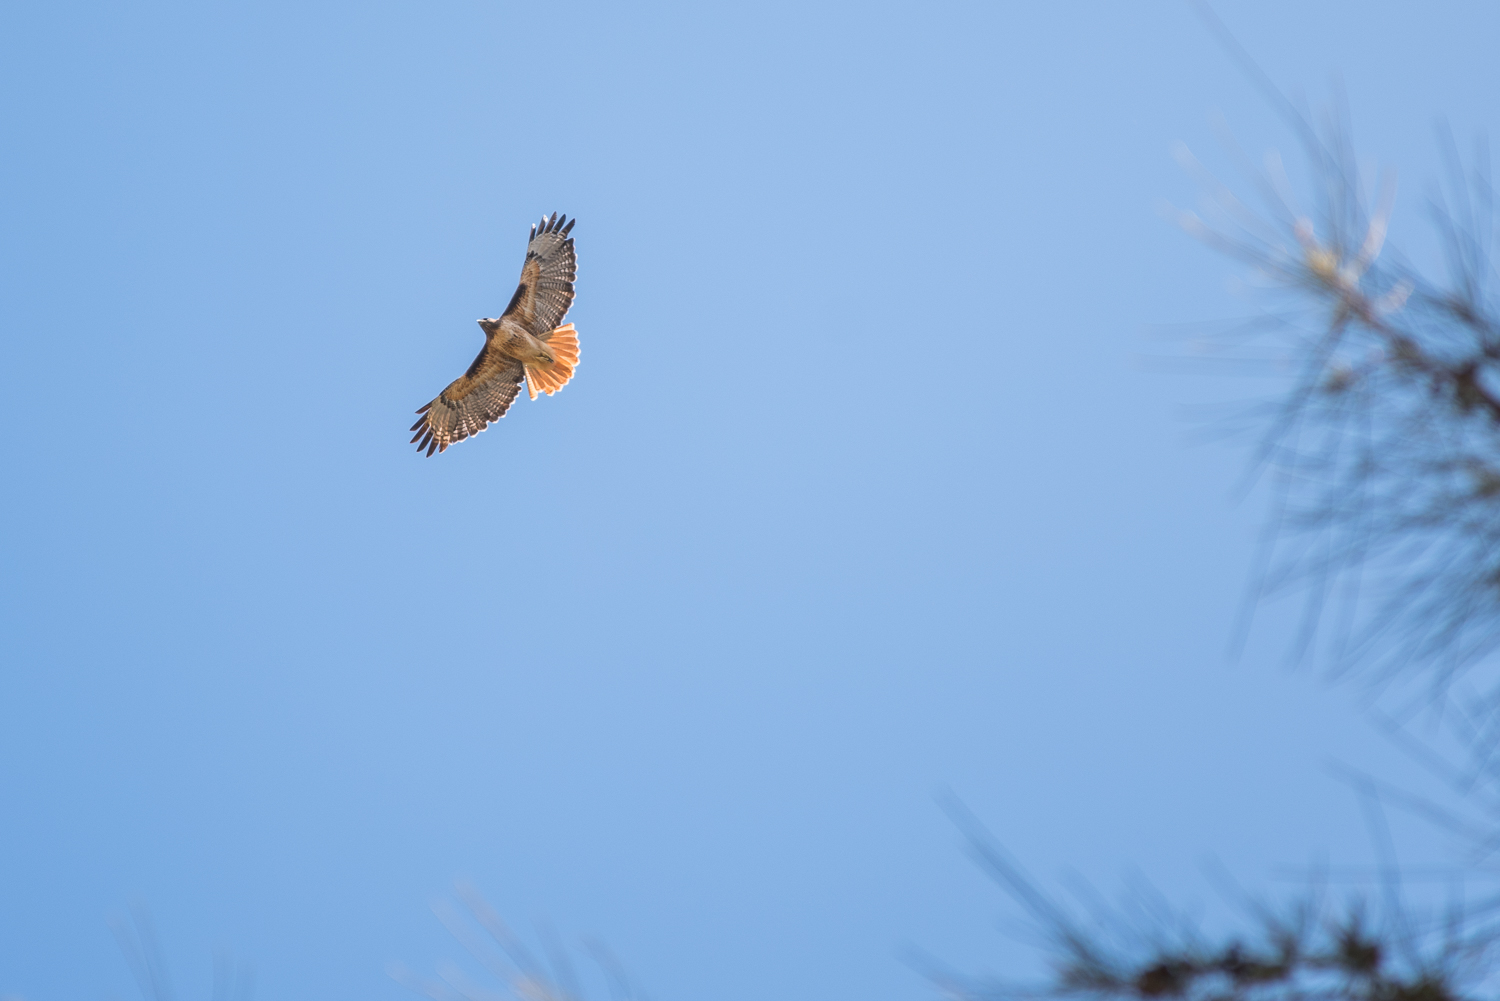 A single brown hawk flies against a clear blue sky.